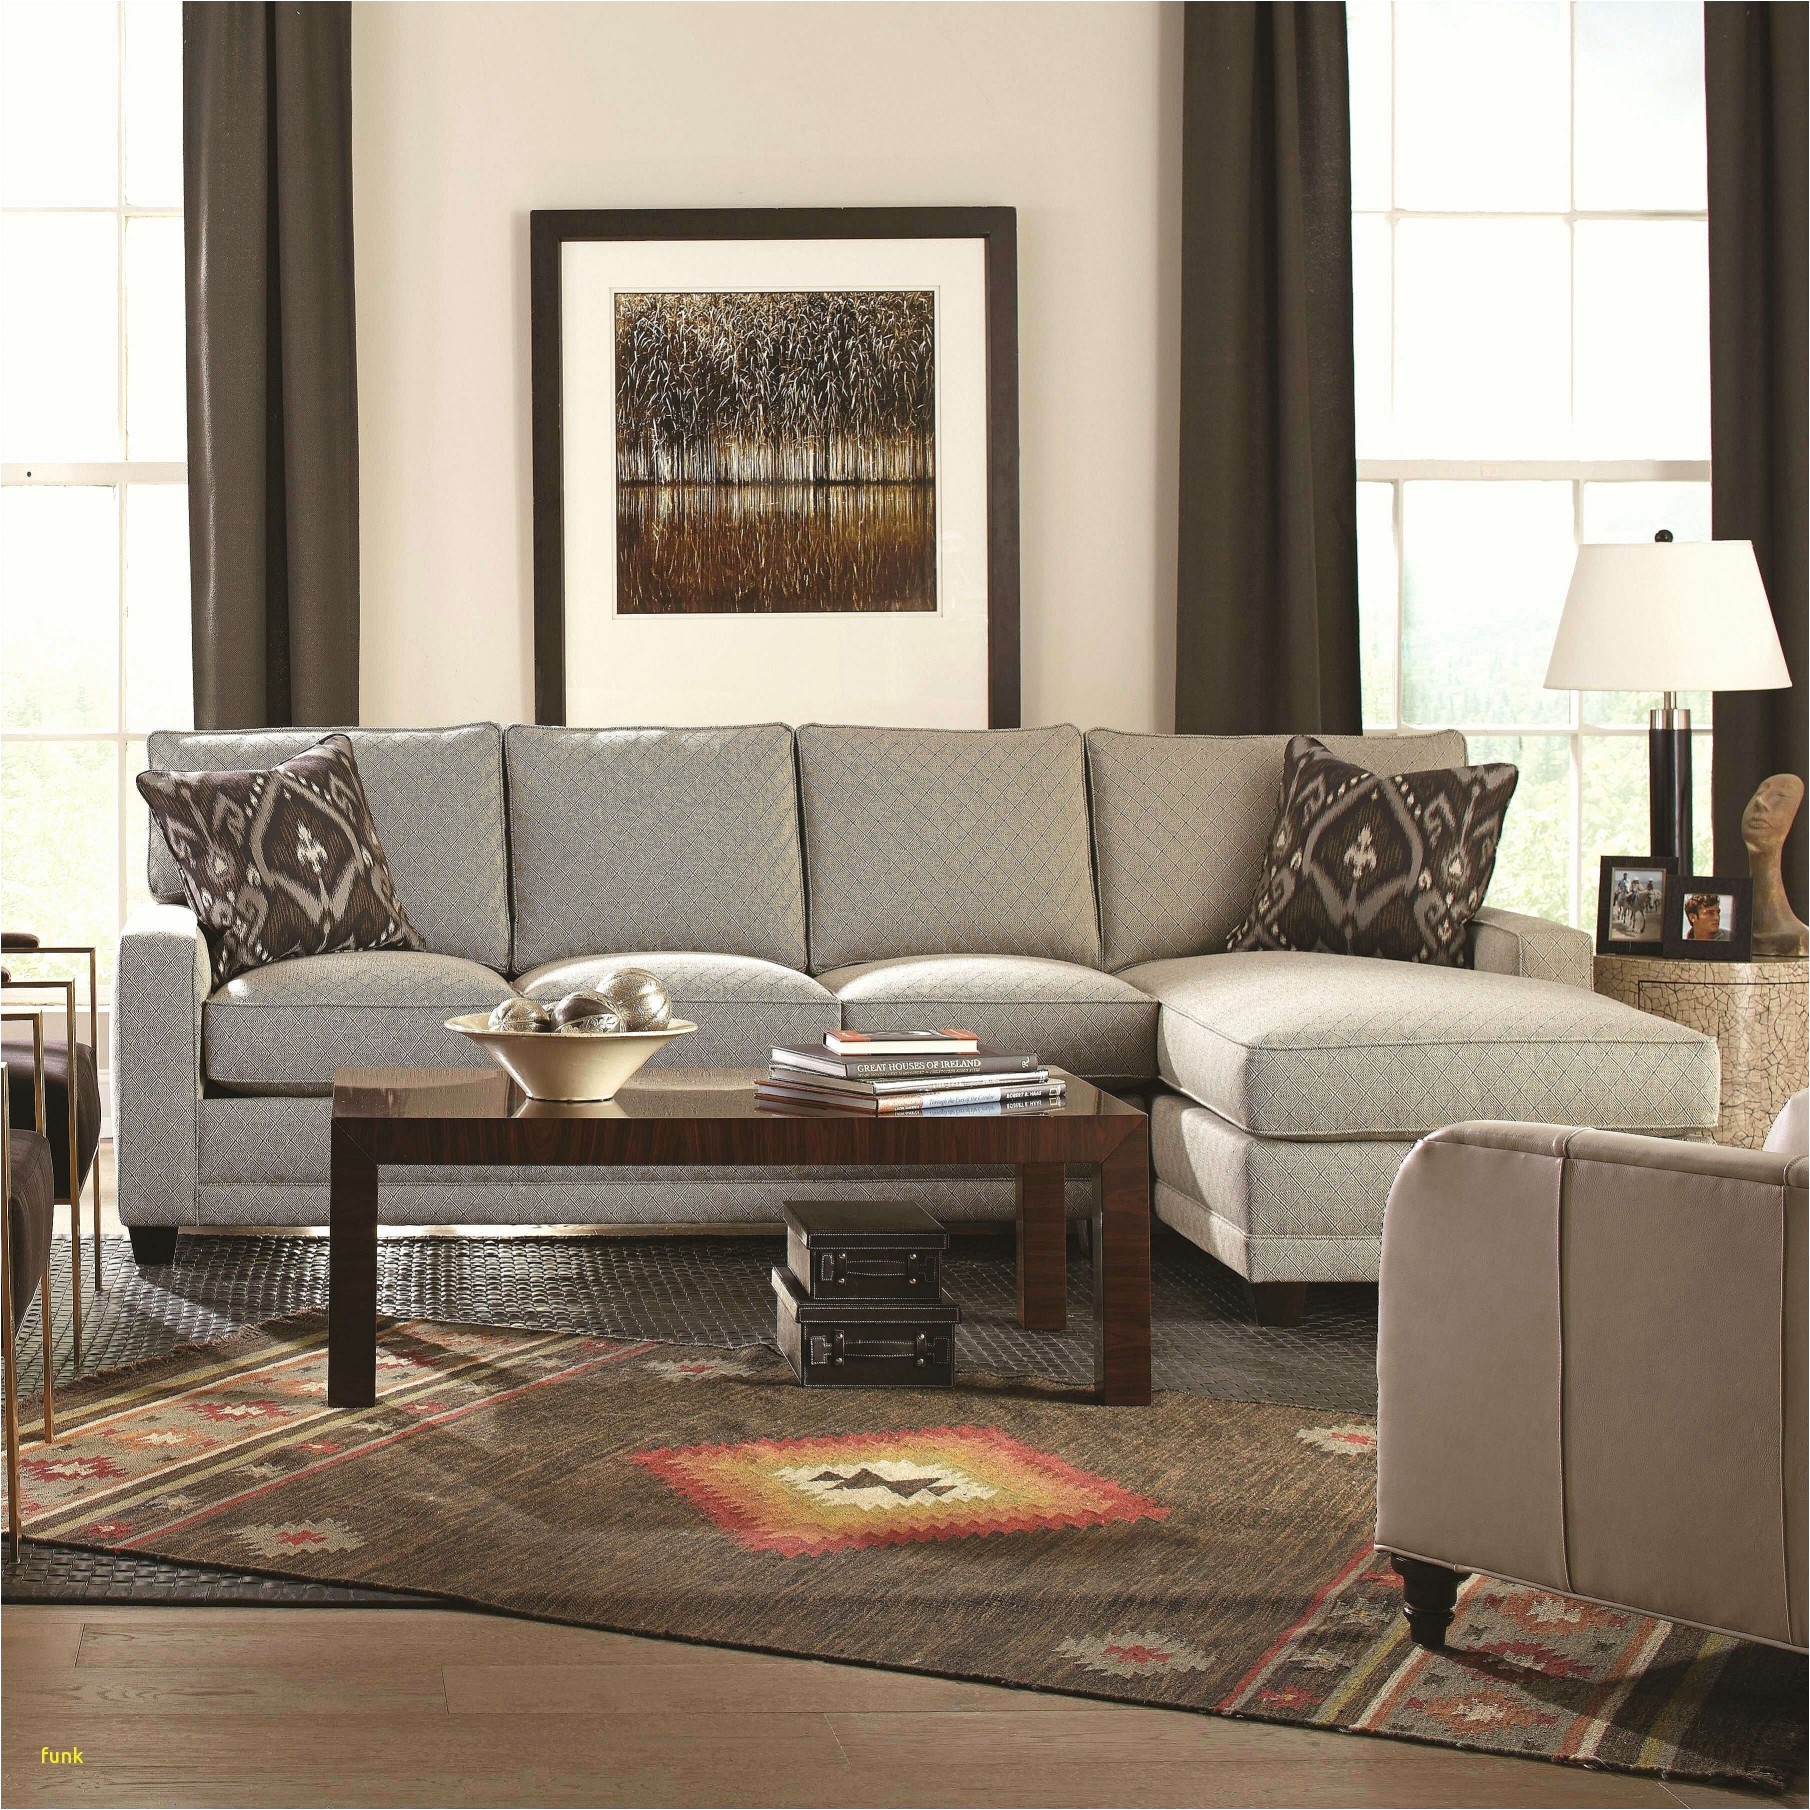 kitchen design furniture wonderful modern living room furniture new gunstige sofa macys furniture 0d